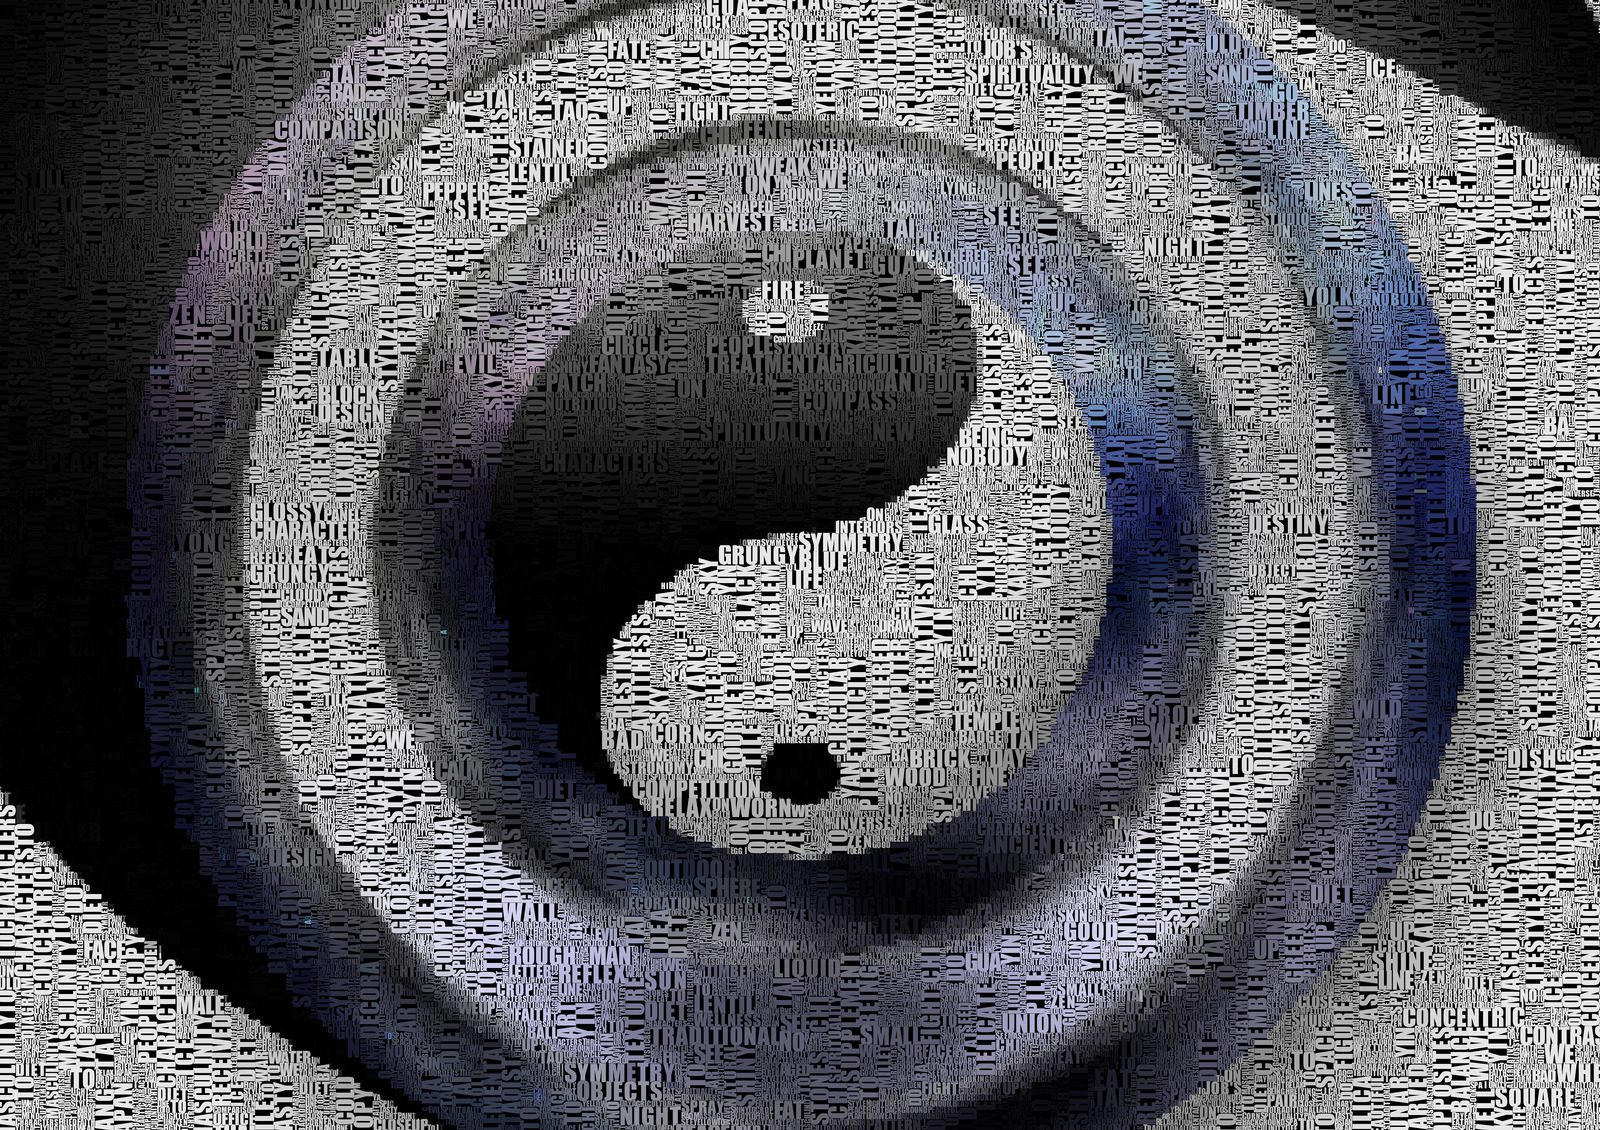 Símbolo de Yin Yang formado por pequenas palavras.